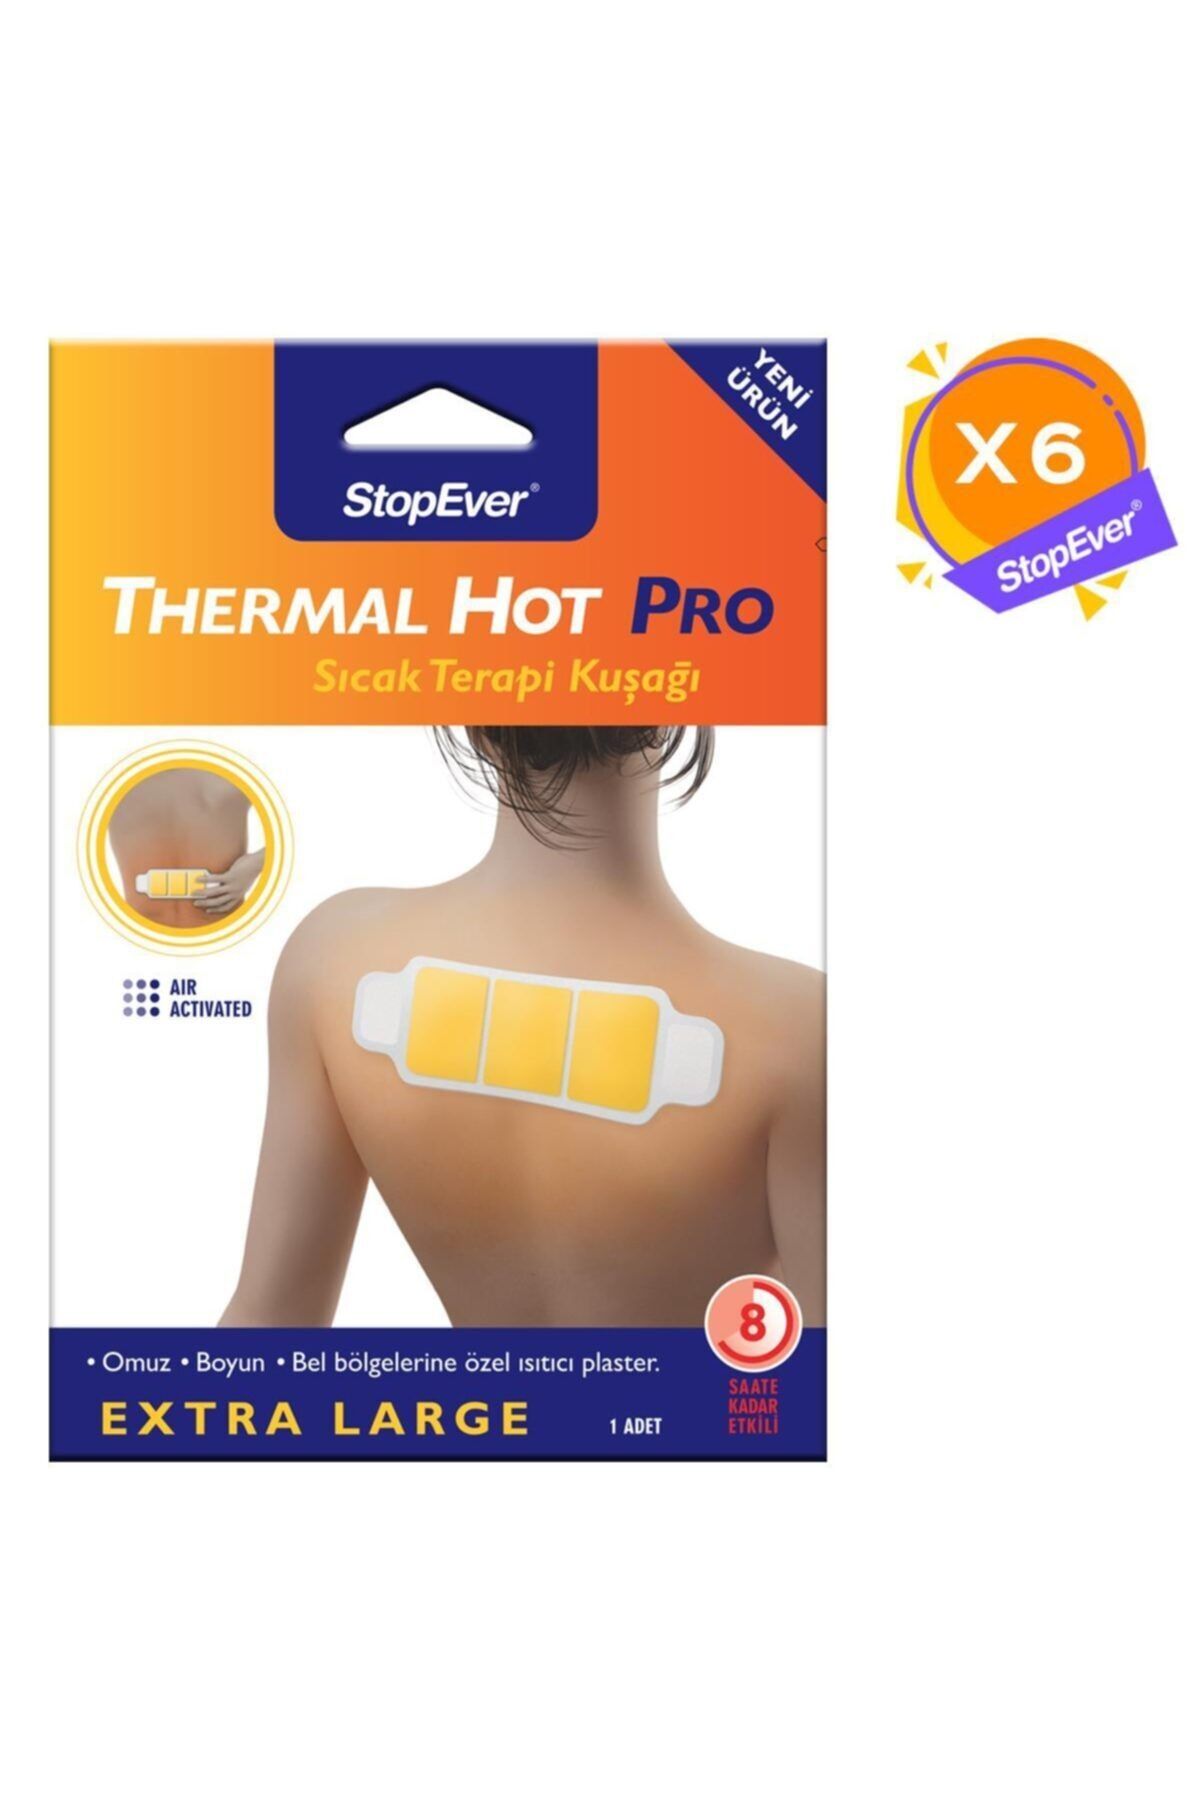 StopEver Thermal Hot Pro Sıcak Terapi Kuşağı - 6x1 Adet